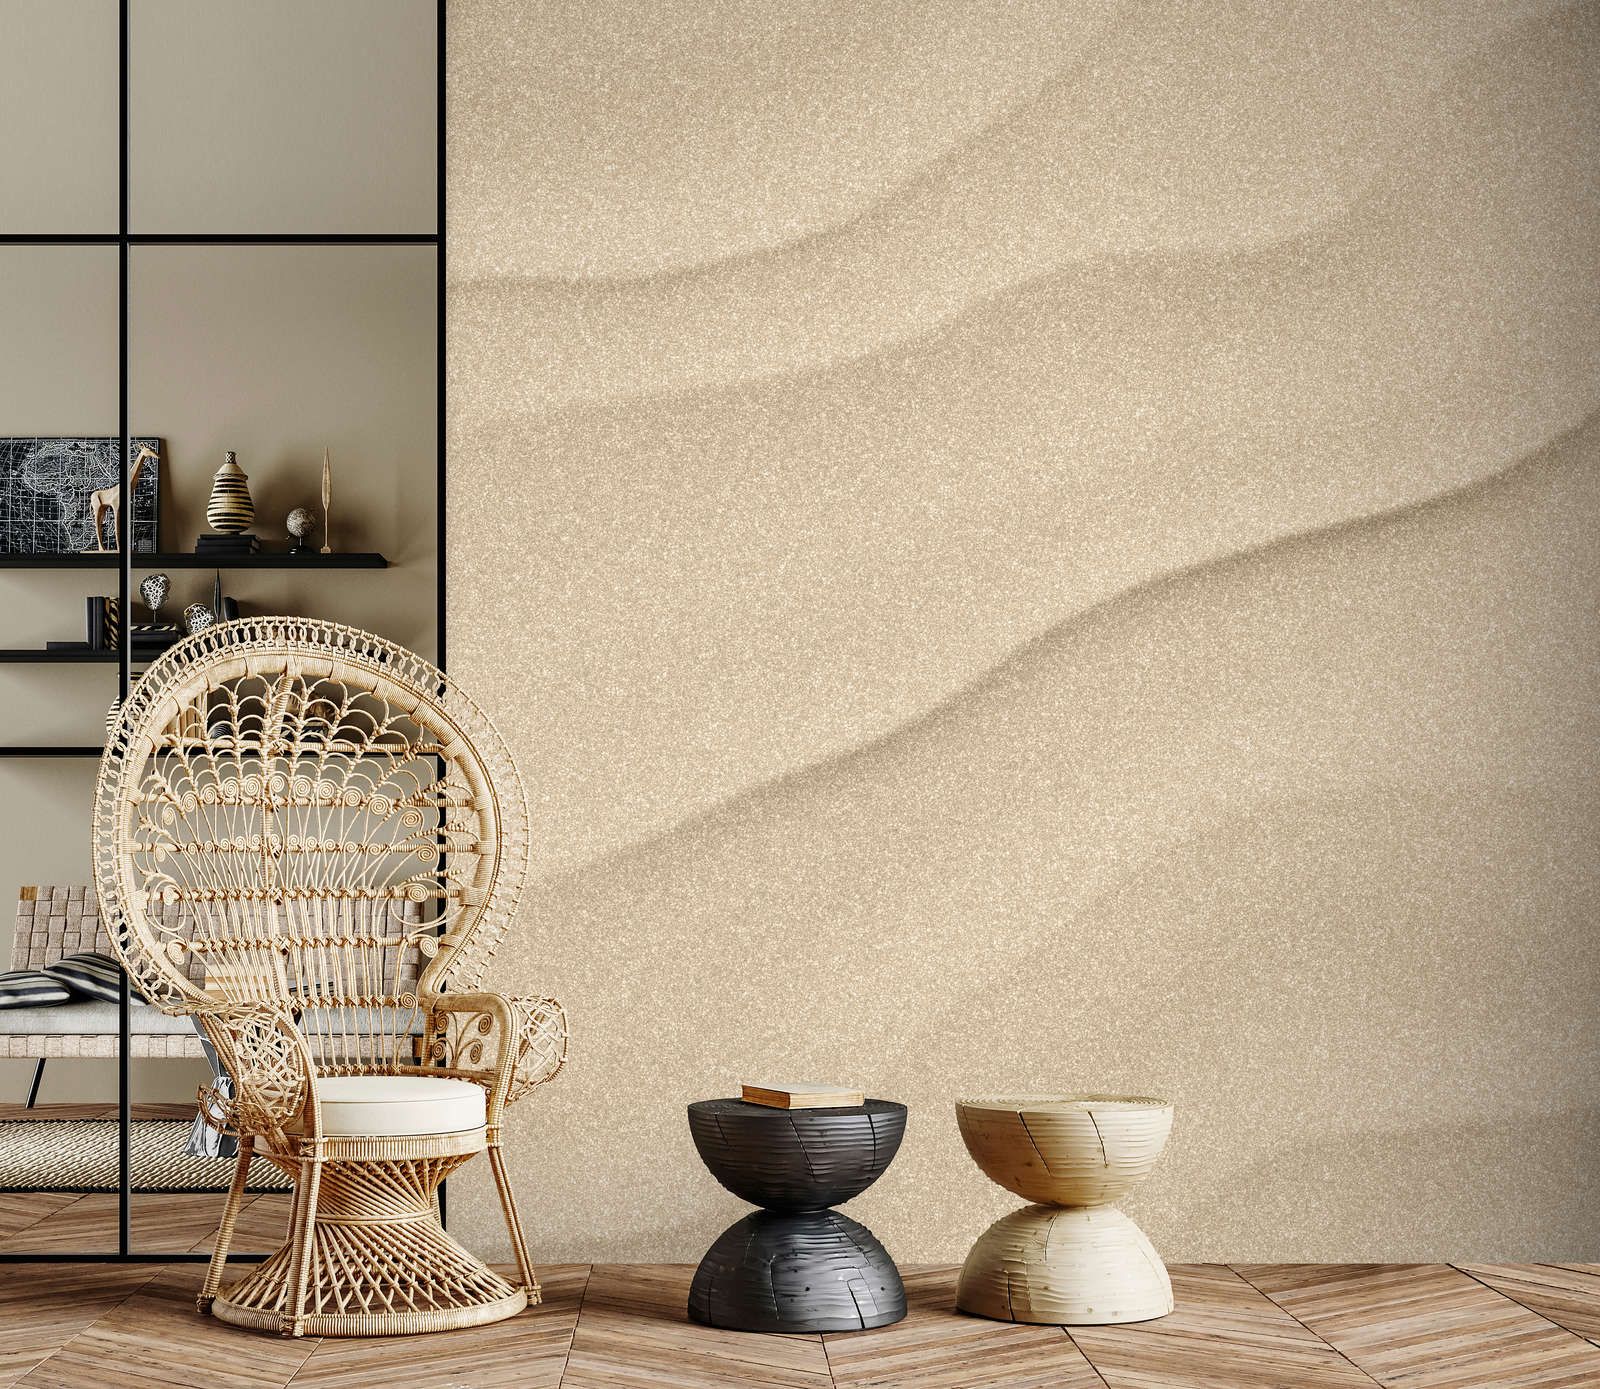             Fotomural »sahara« - Suelo arenoso del desierto con aspecto de papel hecho a mano - Material no tejido de textura ligera
        